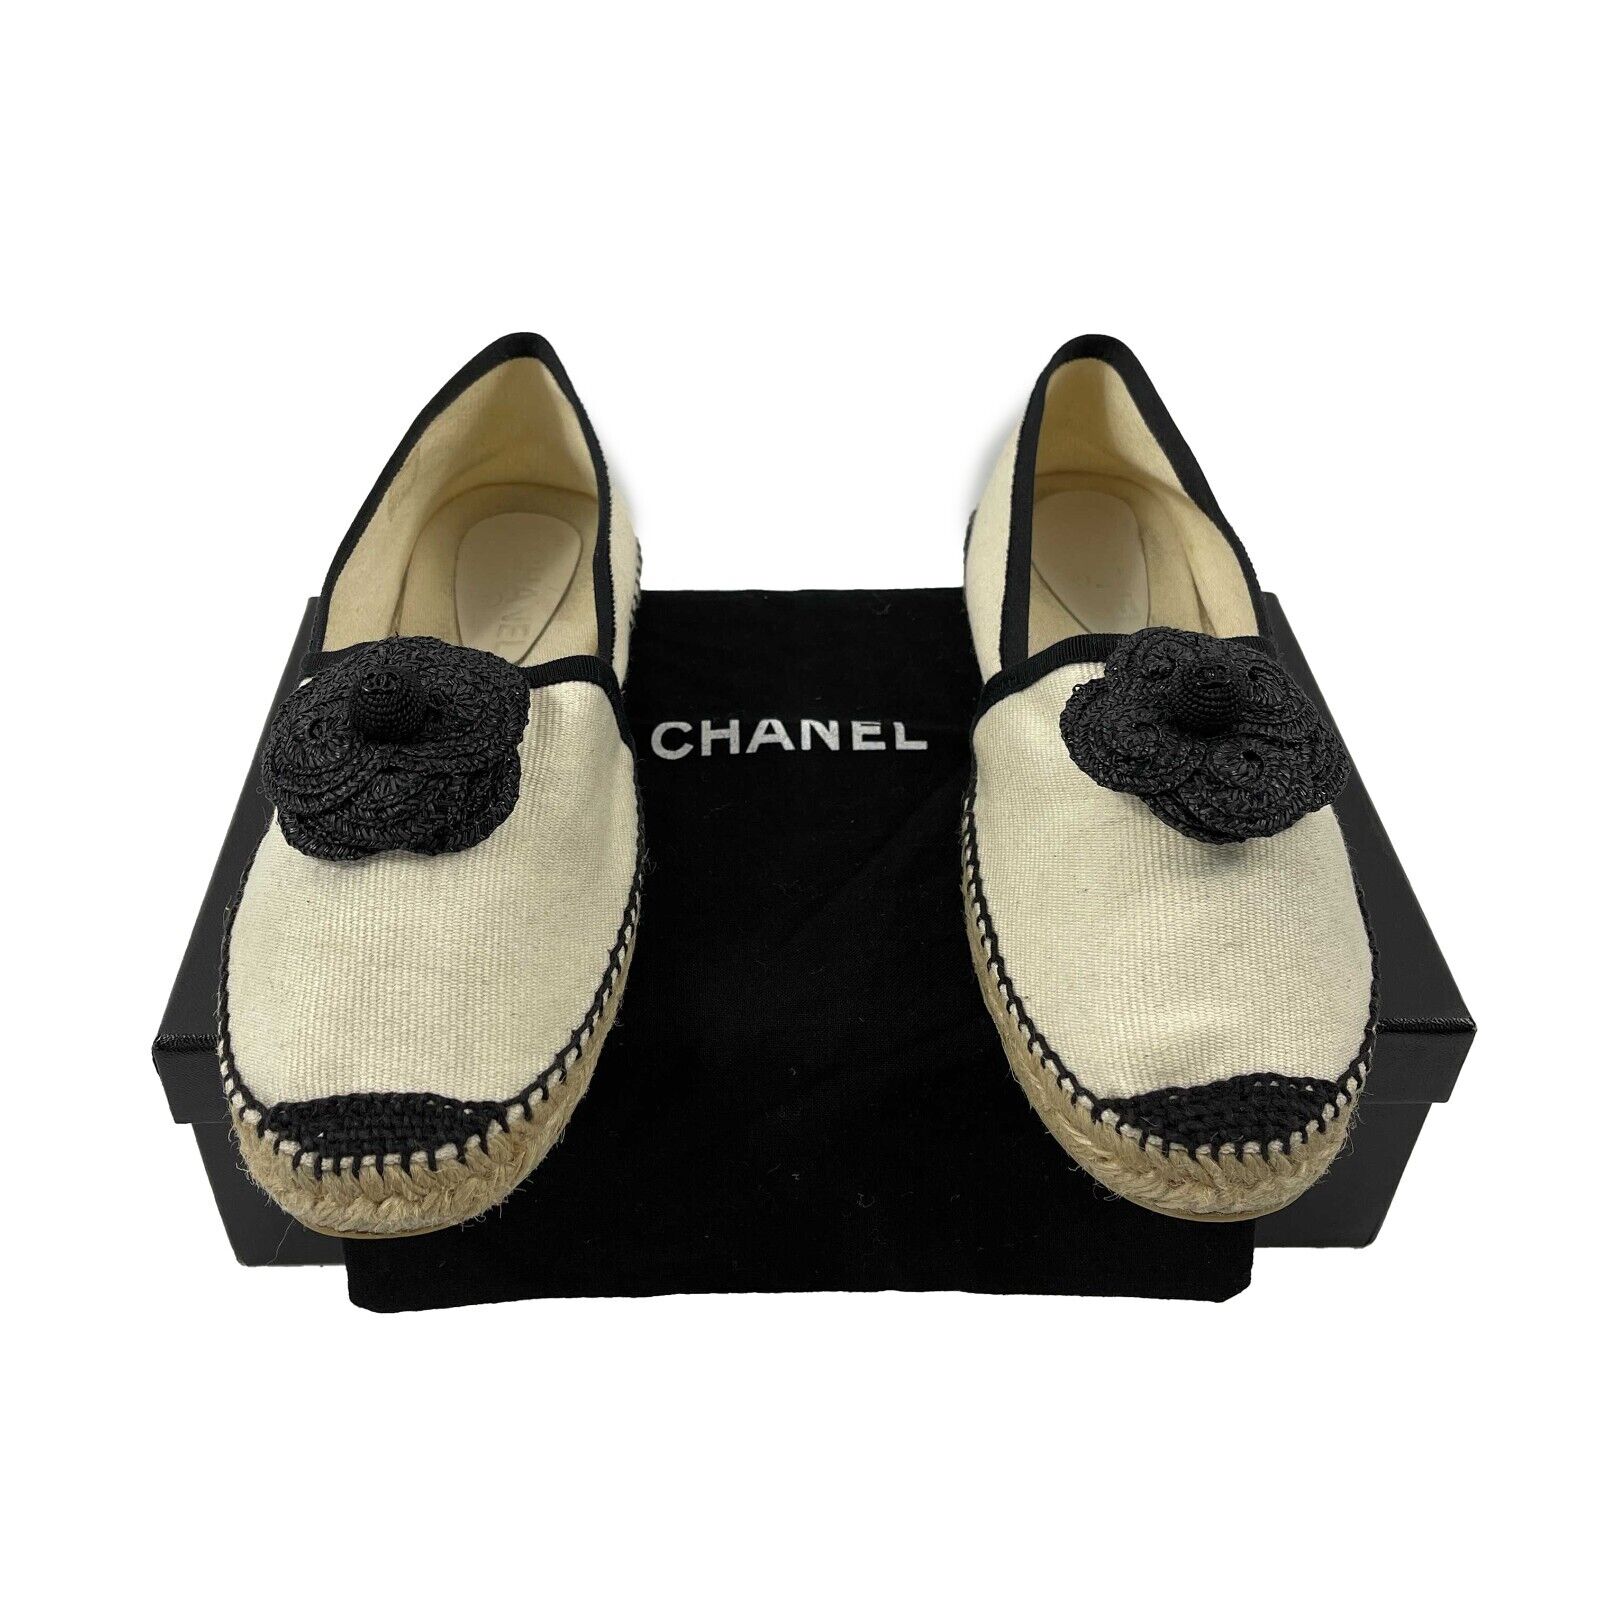 Chanel Black Leather CC Logo Flat Espadrille Shoes  375  I MISS YOU  VINTAGE